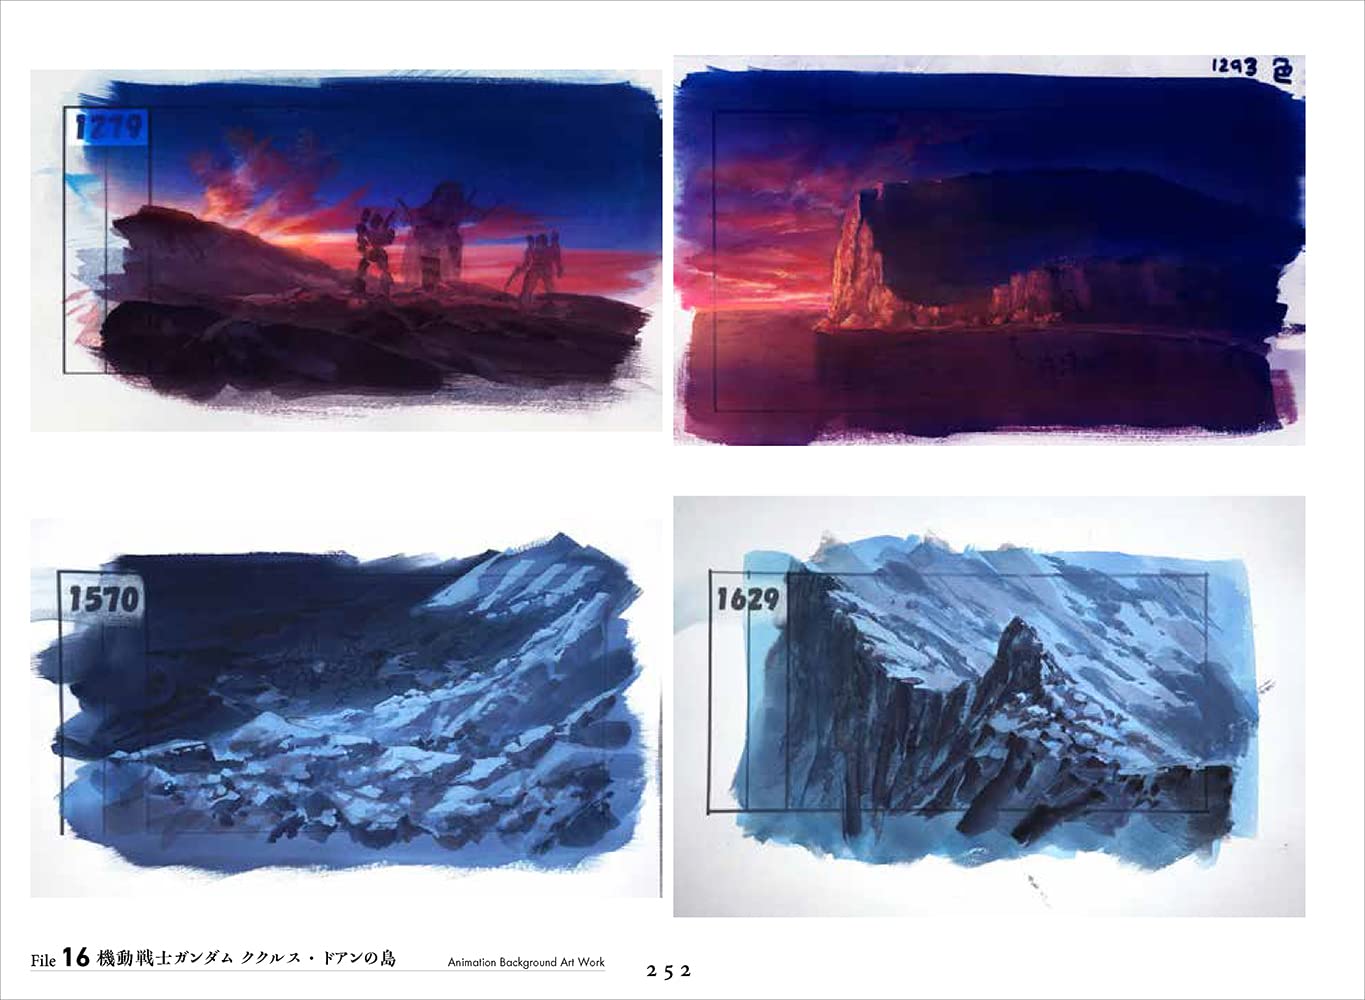 Yuji Kaneko Animation Background Art Book